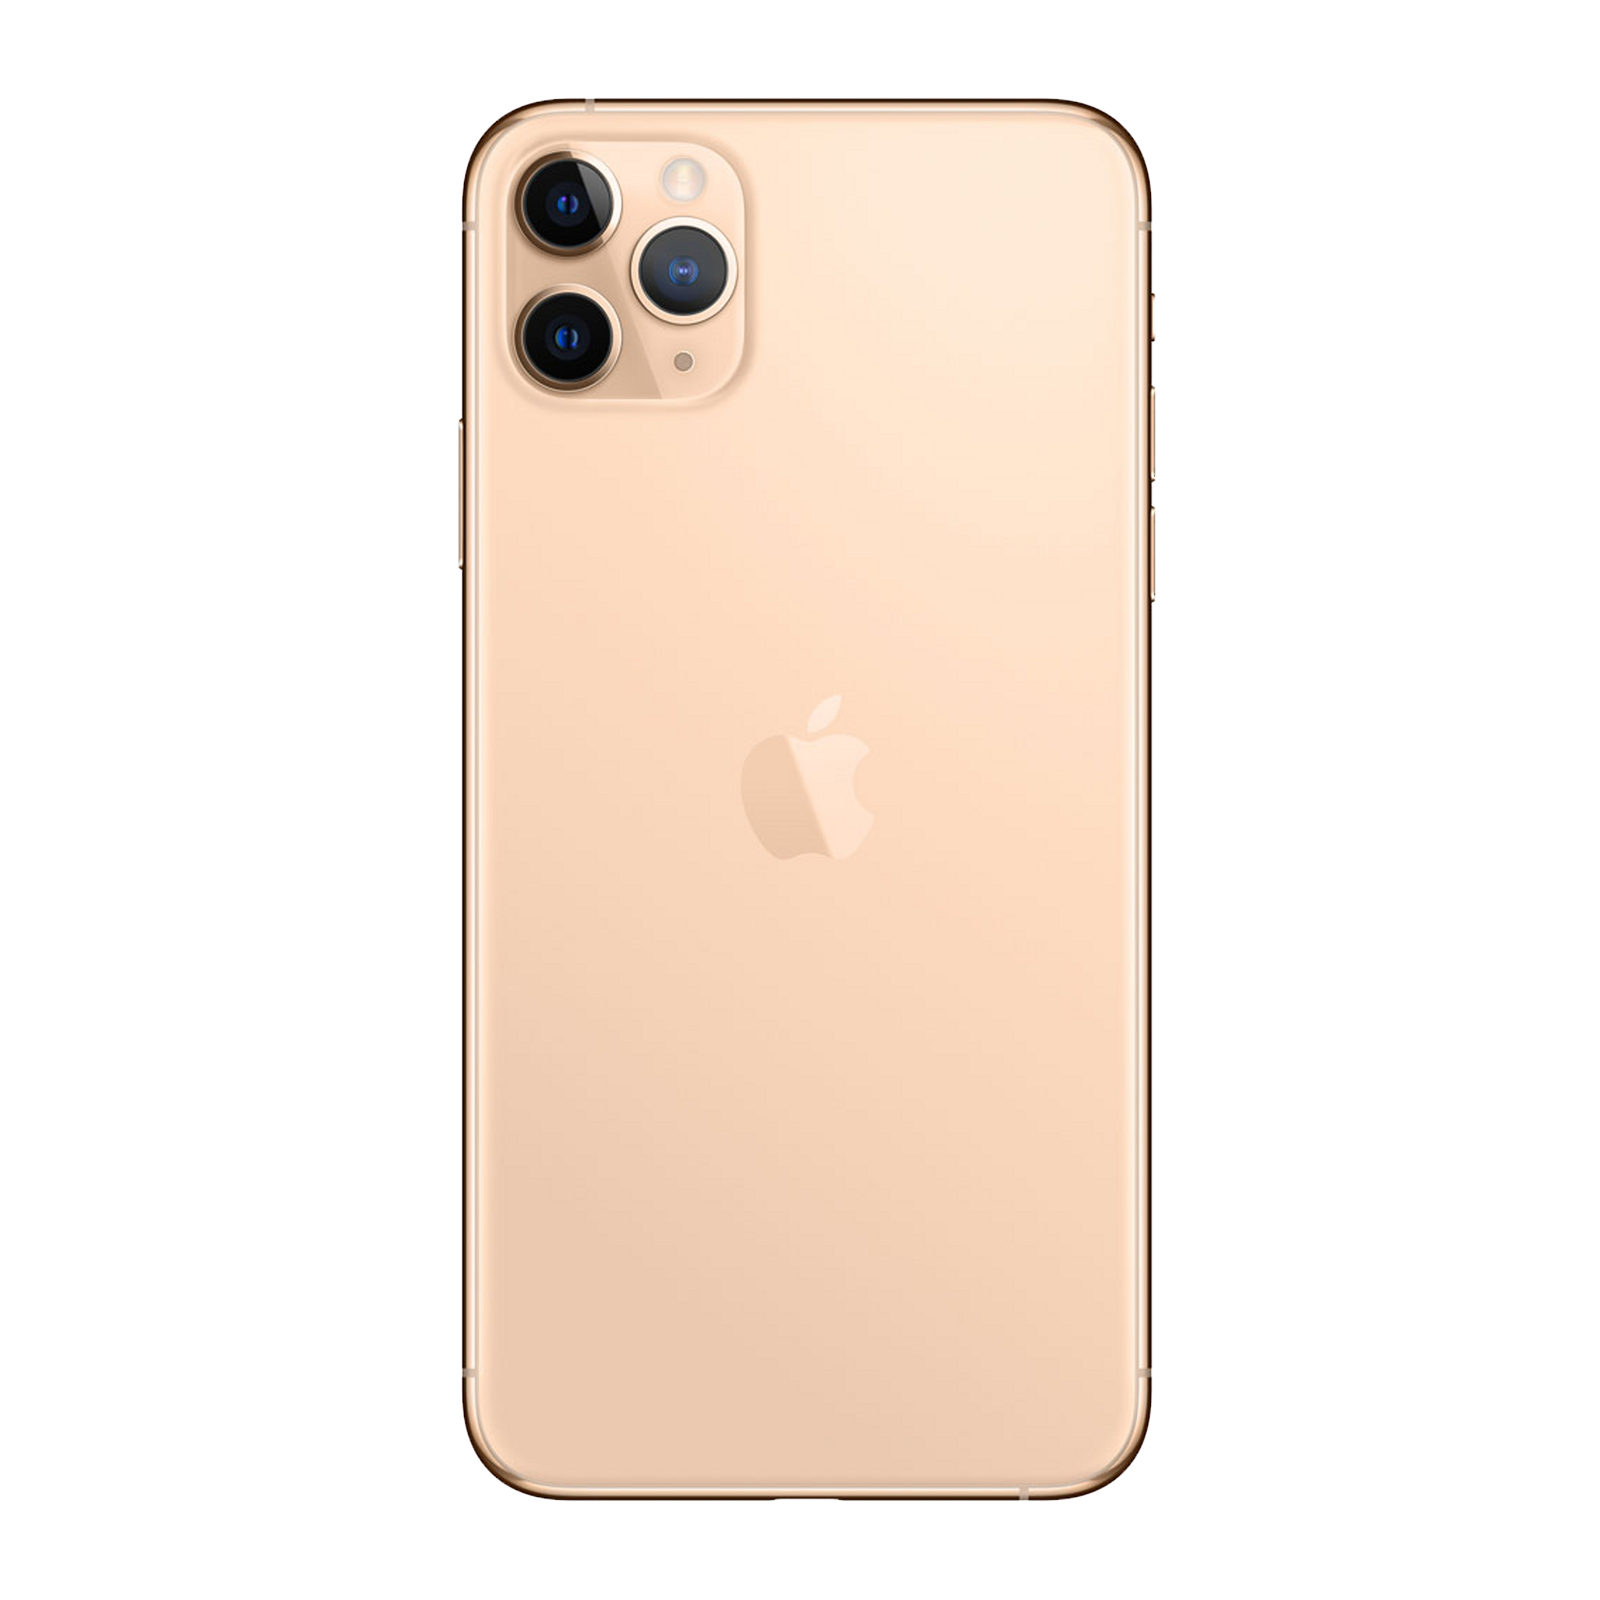 Apple iPhone 11 Pro Max 64GB Gold Pristine - Unlocked